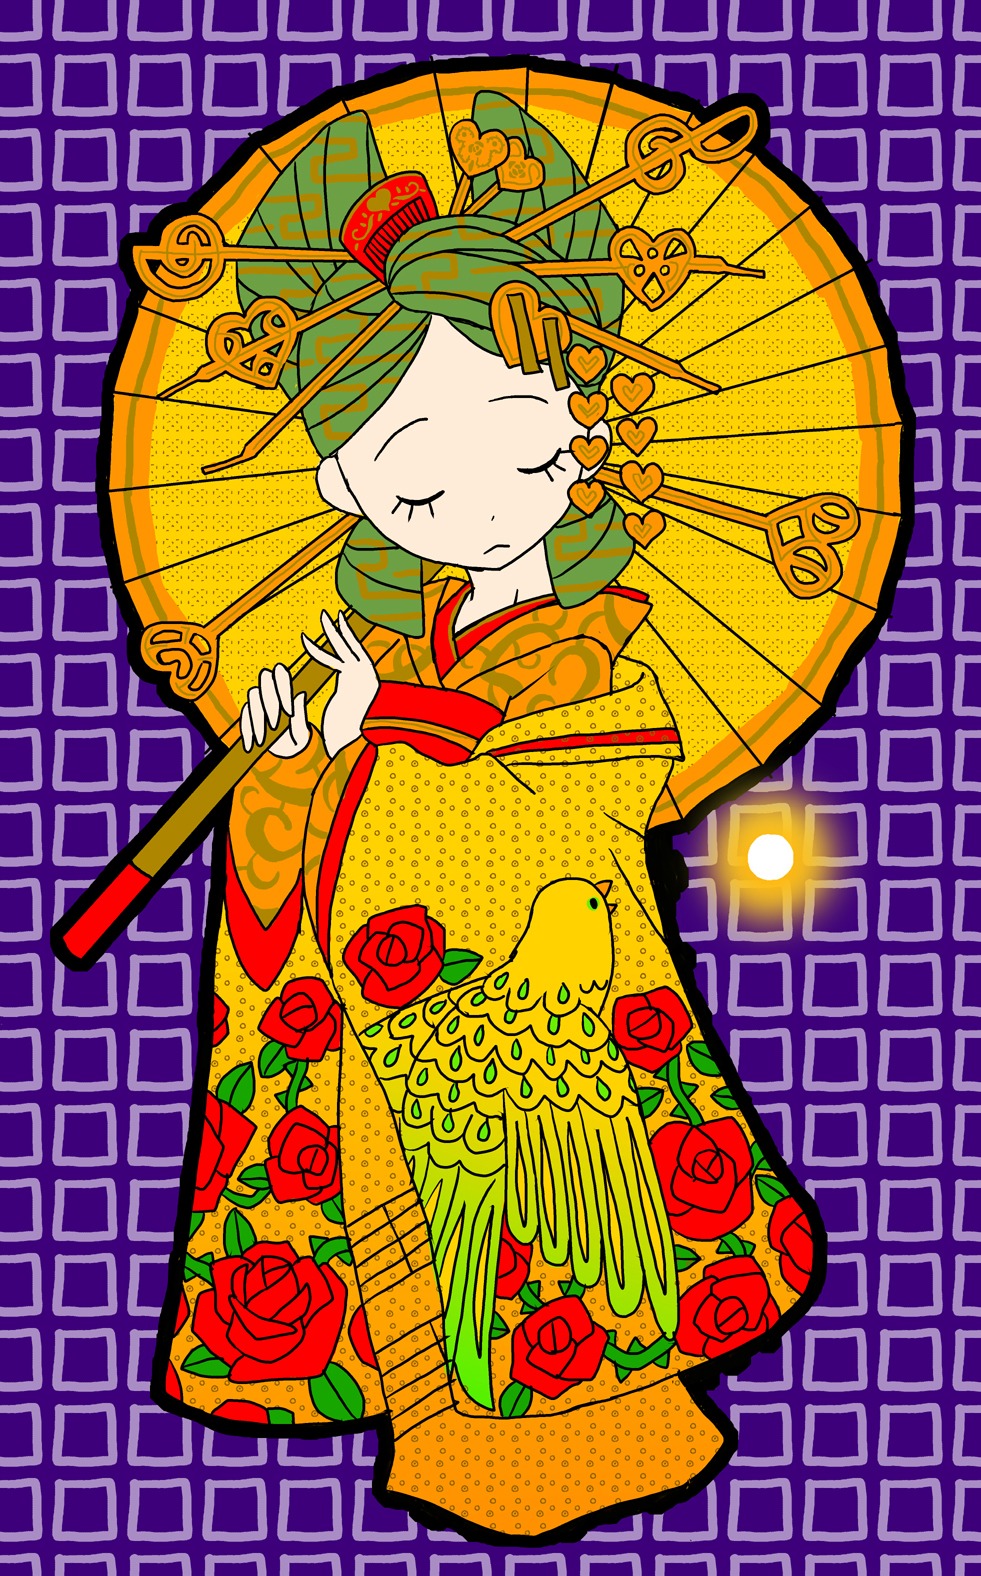 1girl closed_eyes flower honeycomb_(pattern) image japanese_clothes kanaria kimono red_flower red_rose rose solo umbrella yellow_flower yellow_rose